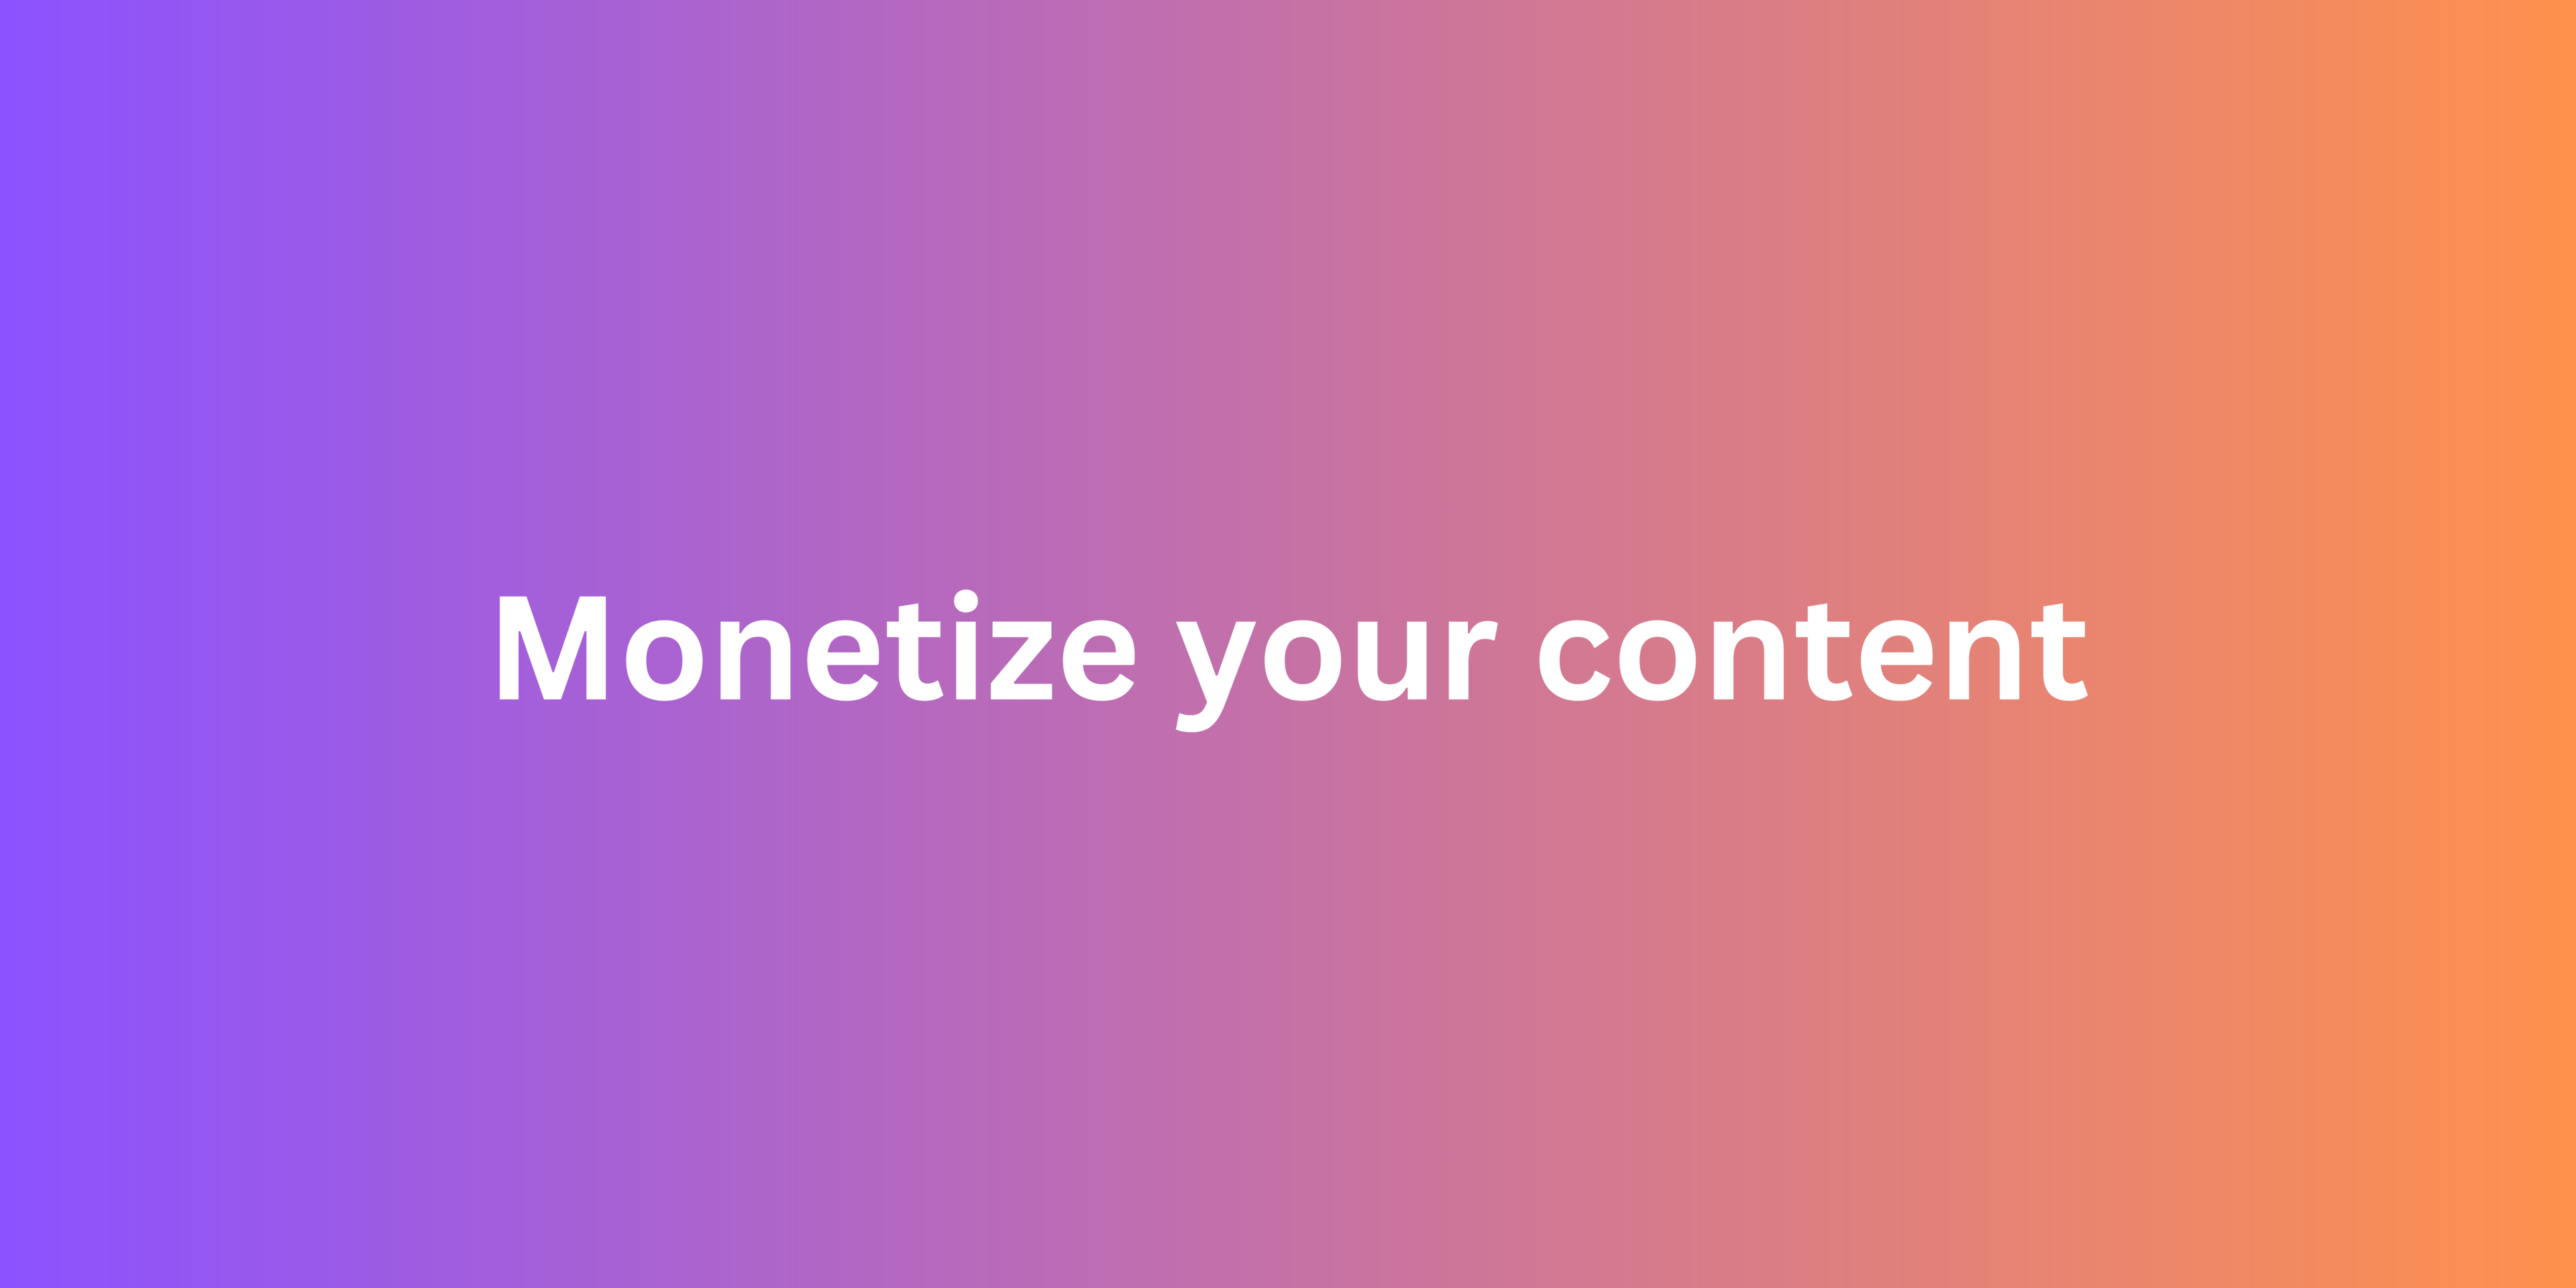 Monetize your content